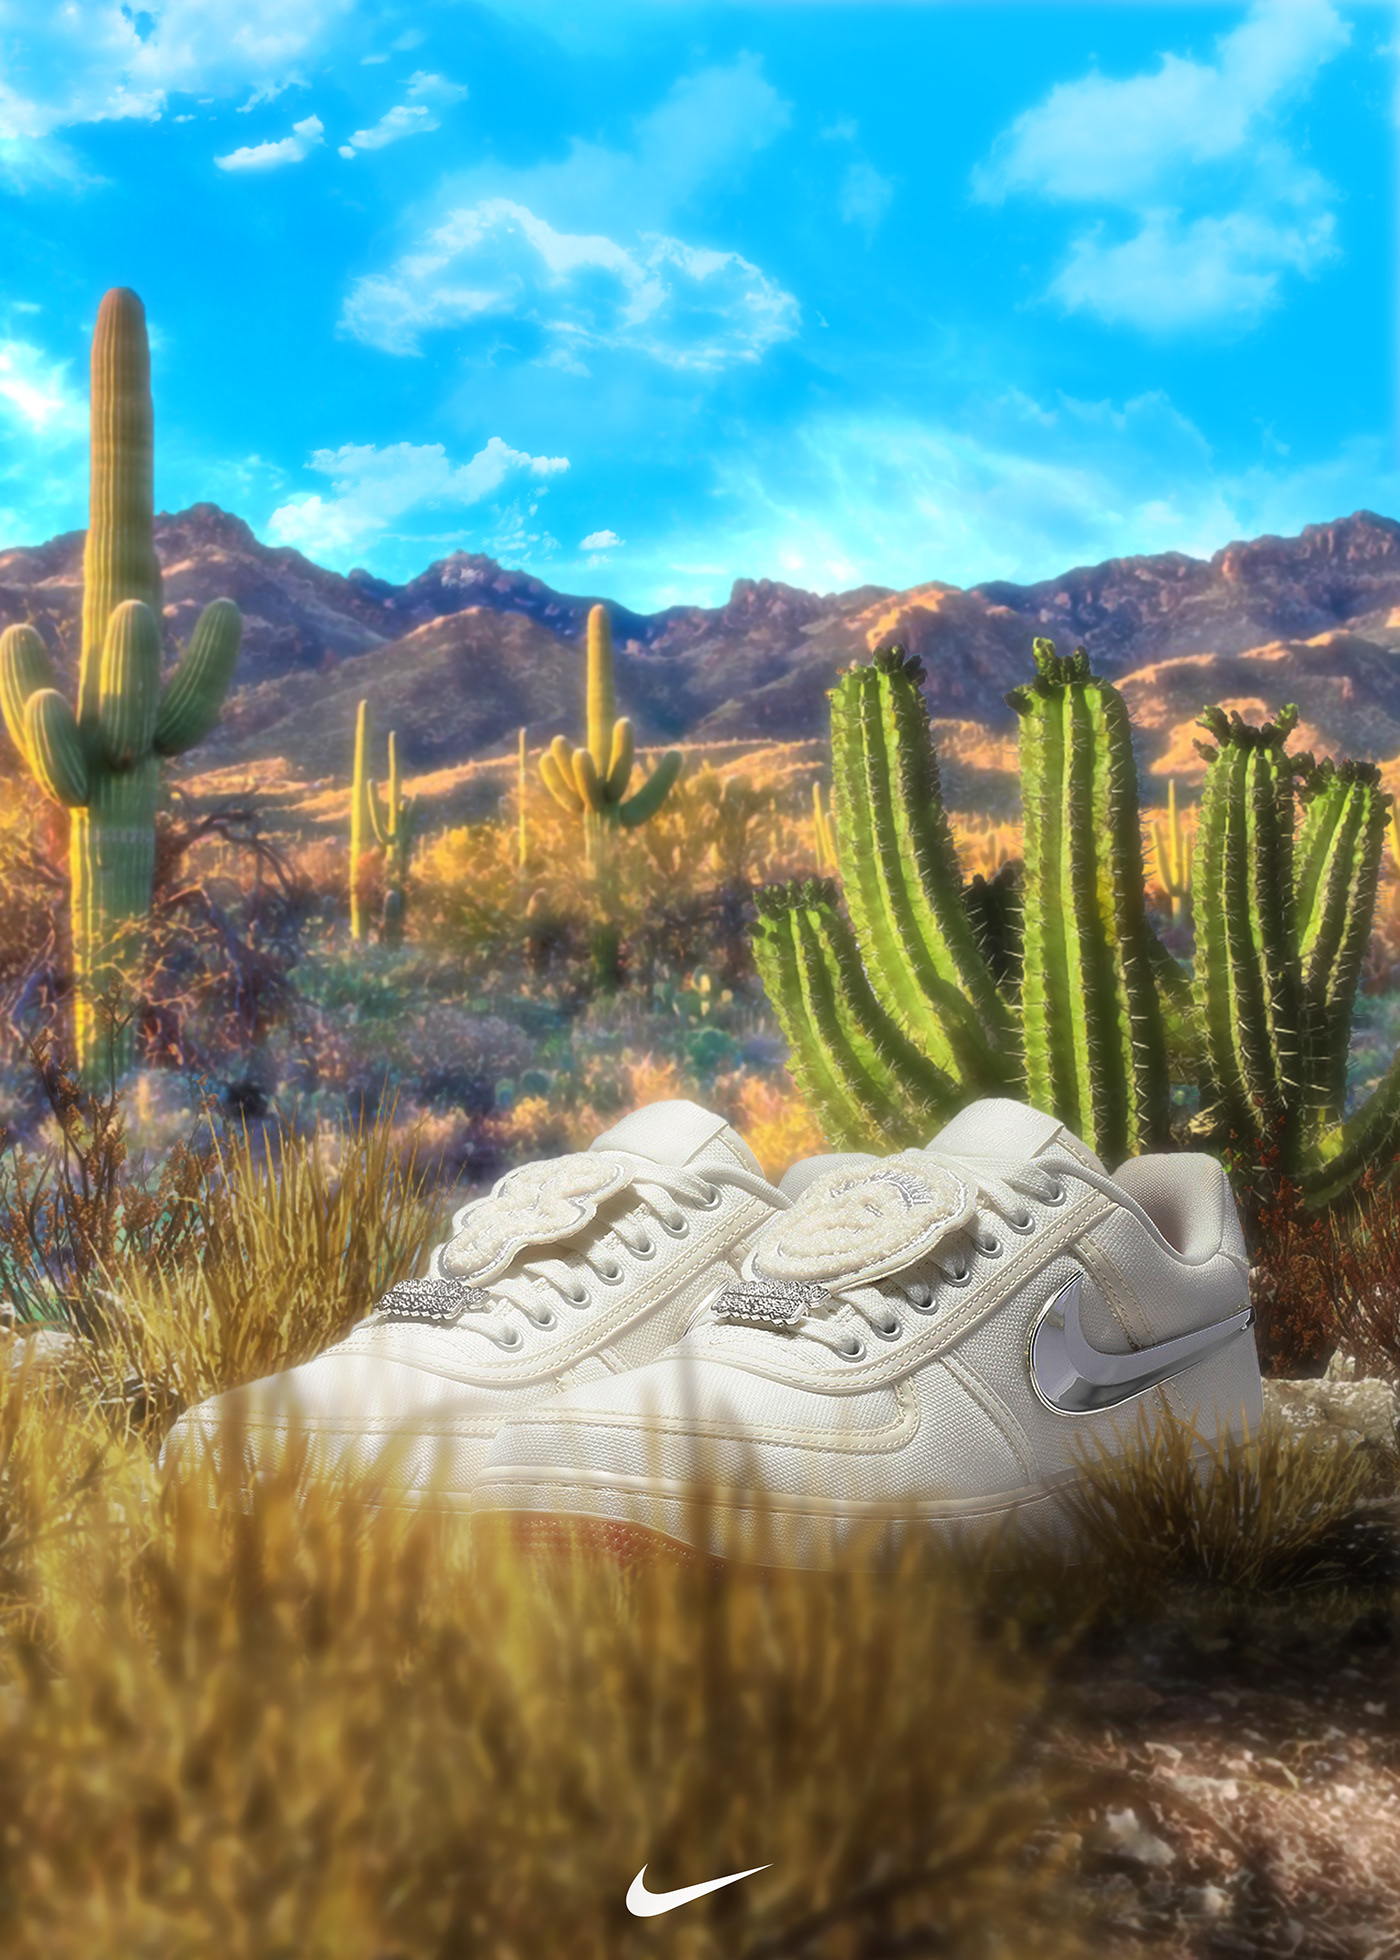 Nike TRAVIS SCOTT Advertising  poster Manipulation Art Nature photoshop footwear sneakers Fashion 